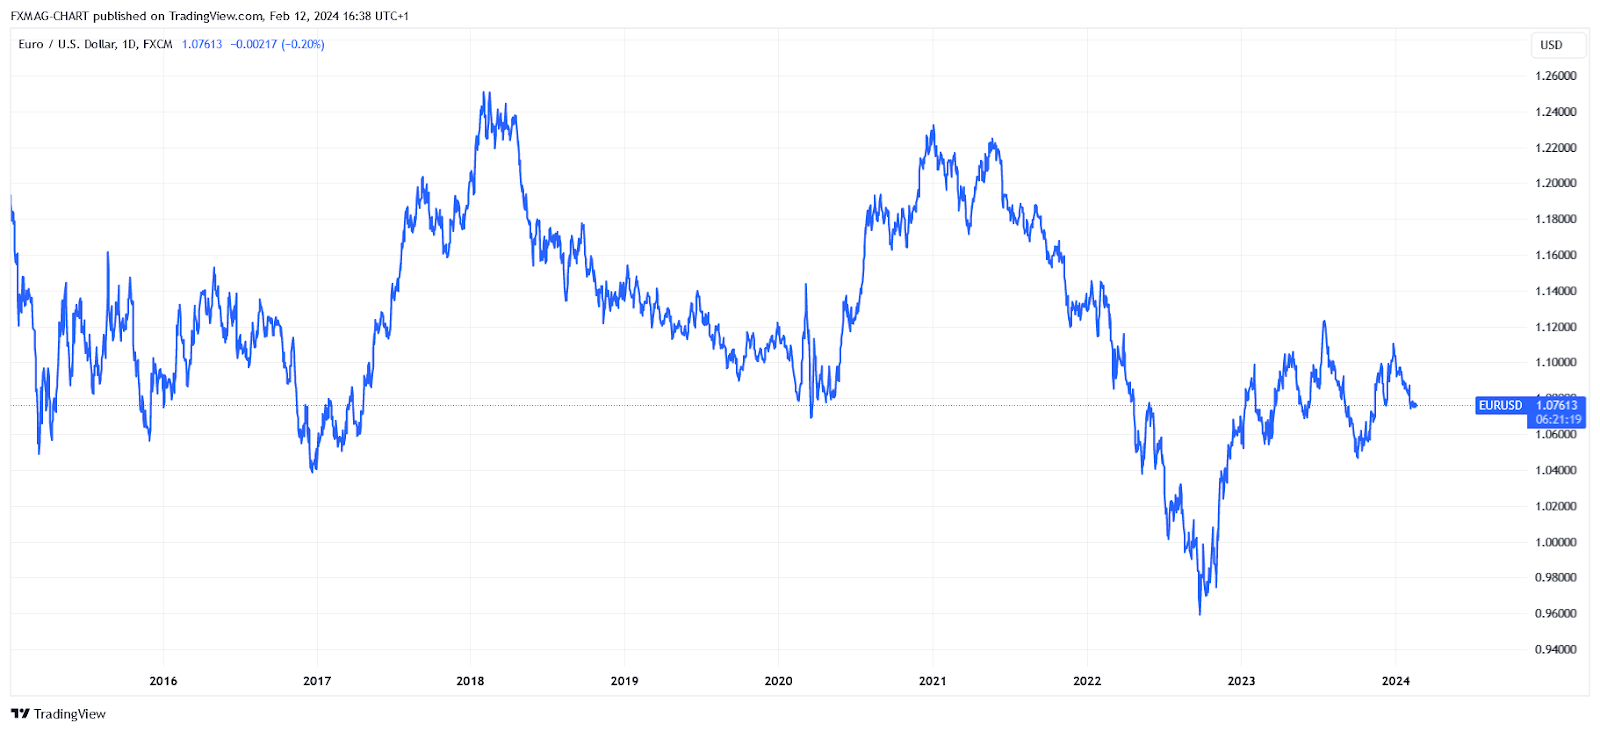 FX:EURUSD Chart Image by FXMAG-CHART